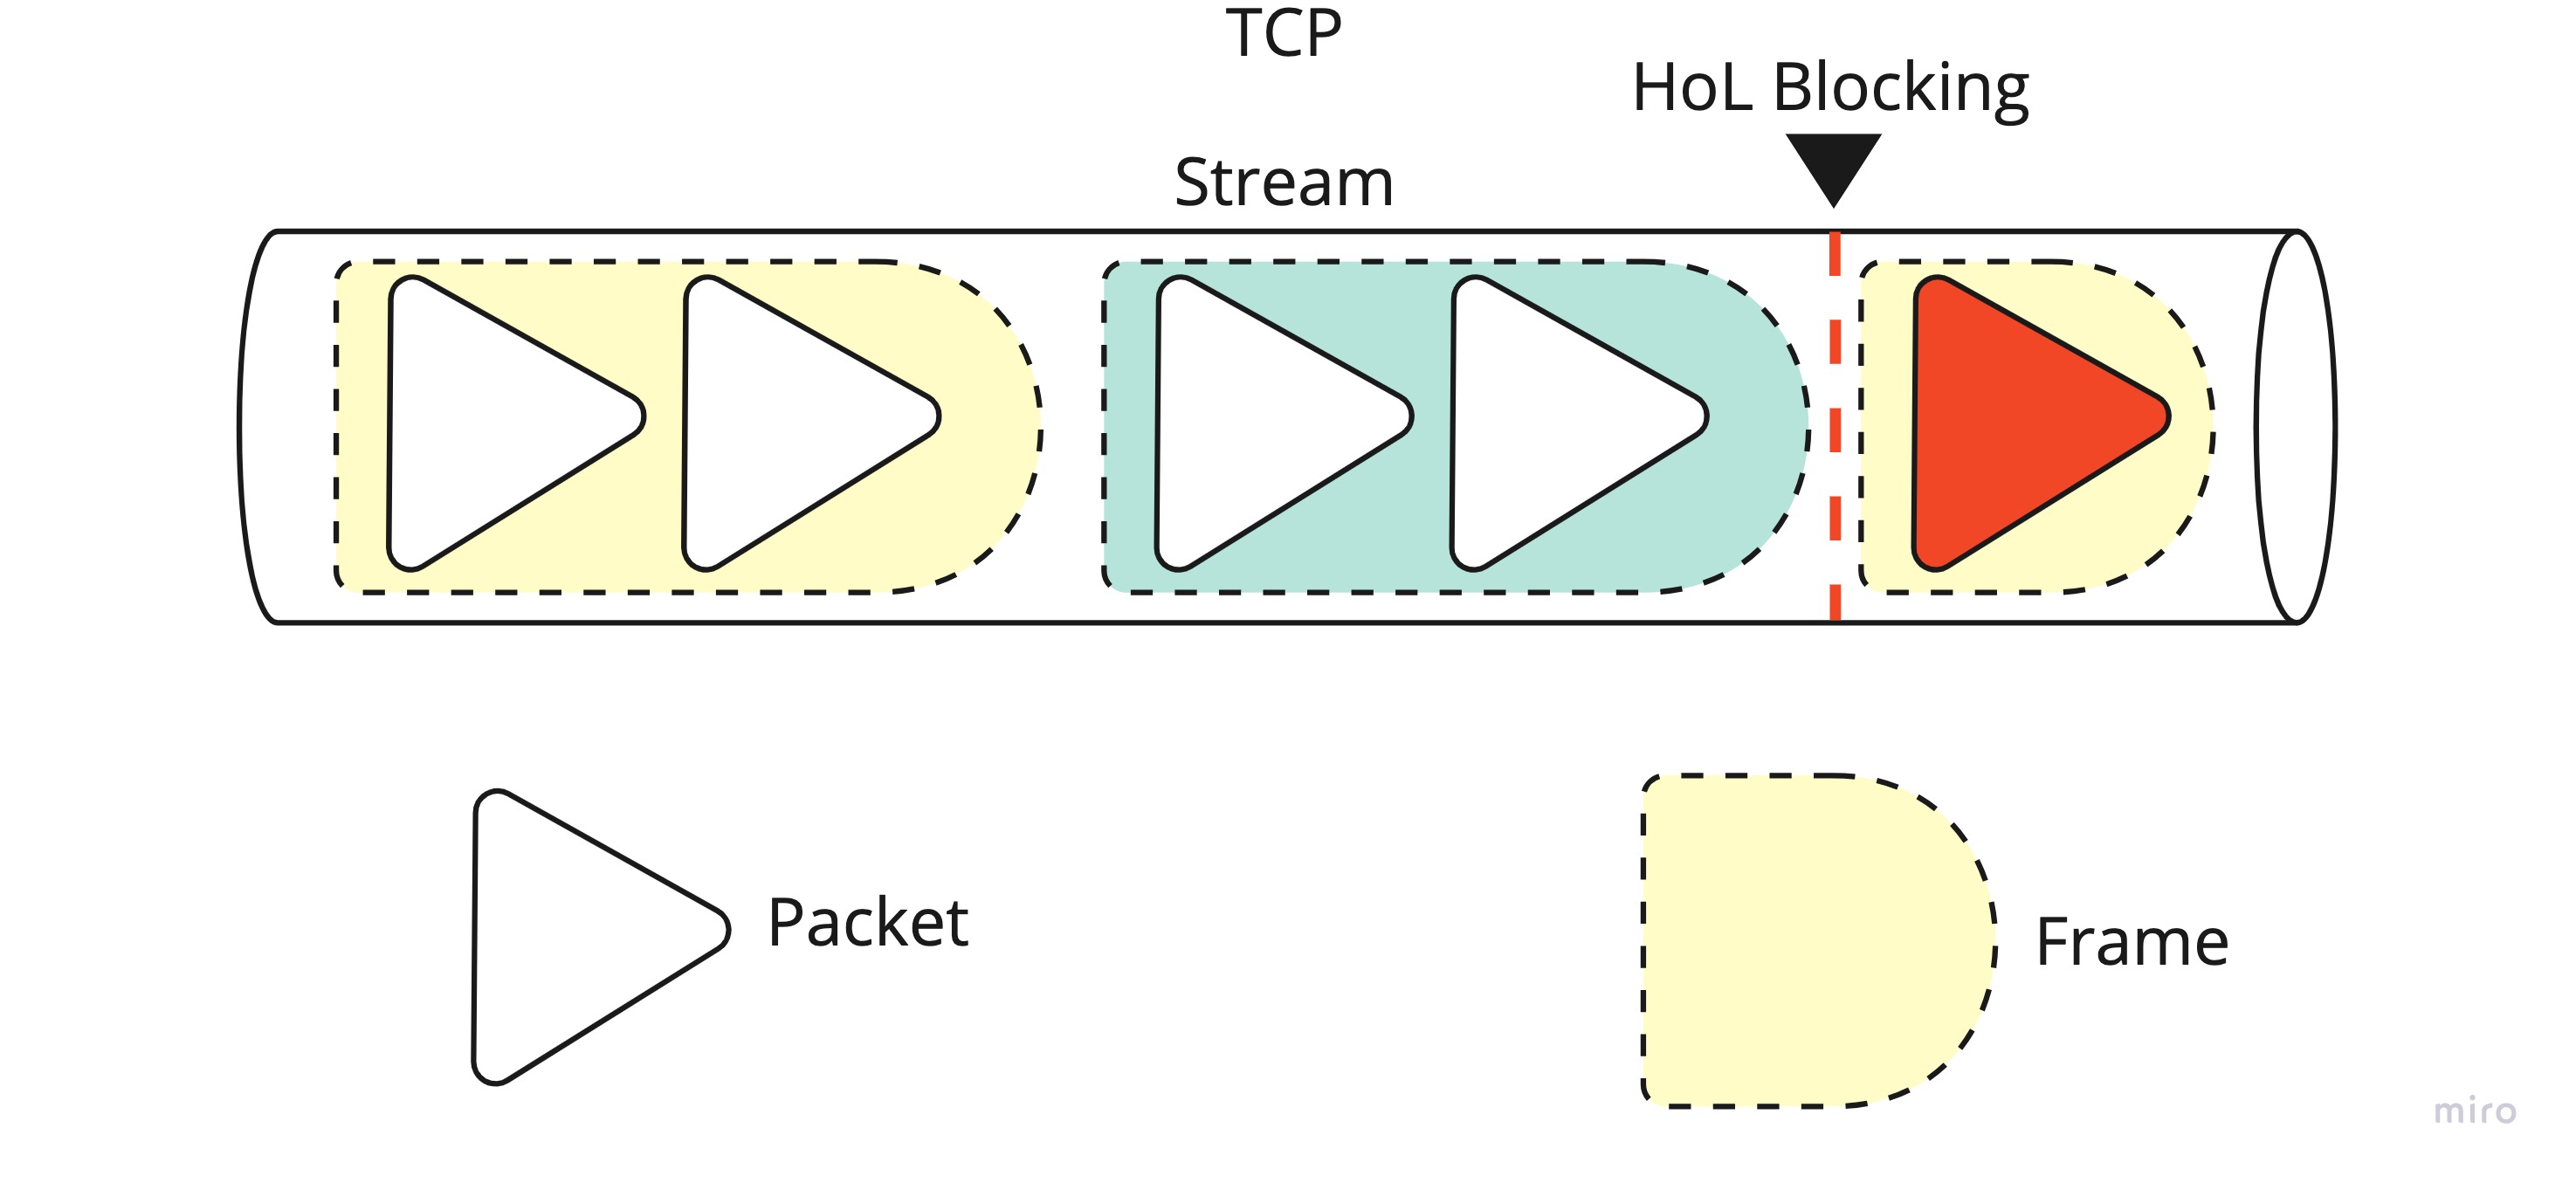 TCP HoL Blocking